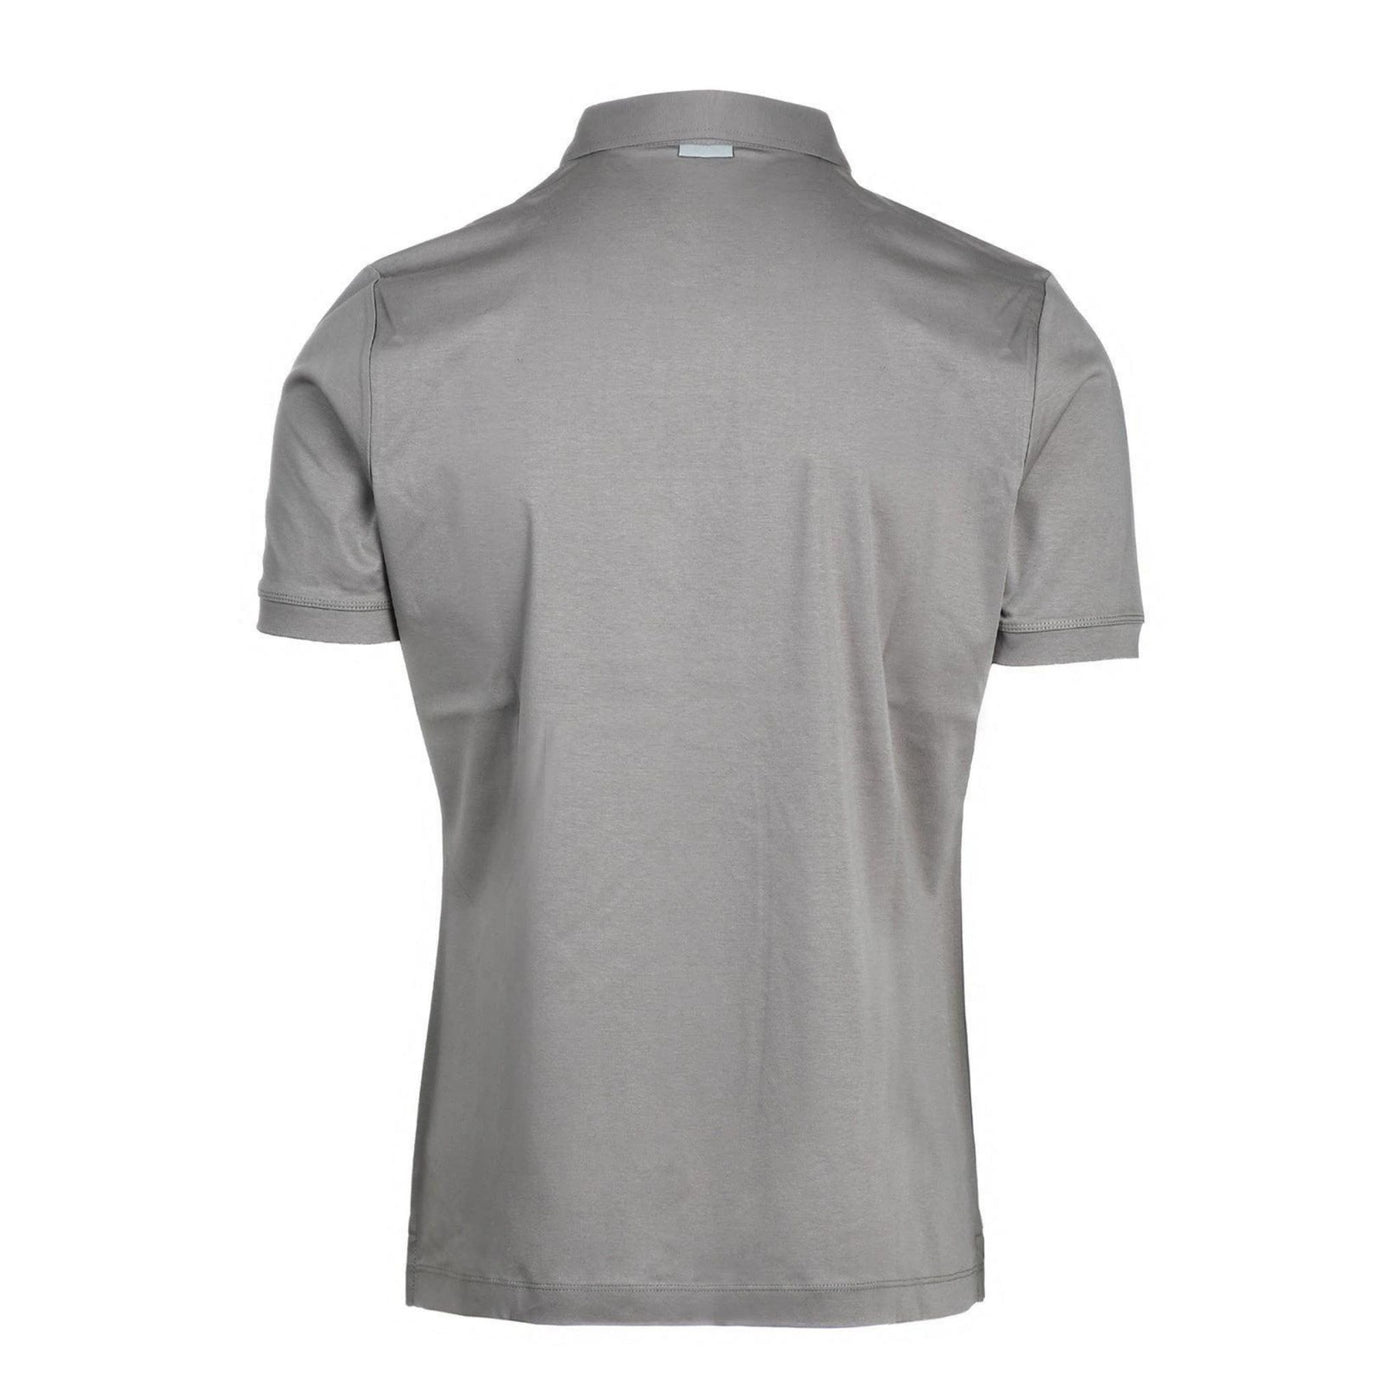 Men's cotton polo shirt with brand logo